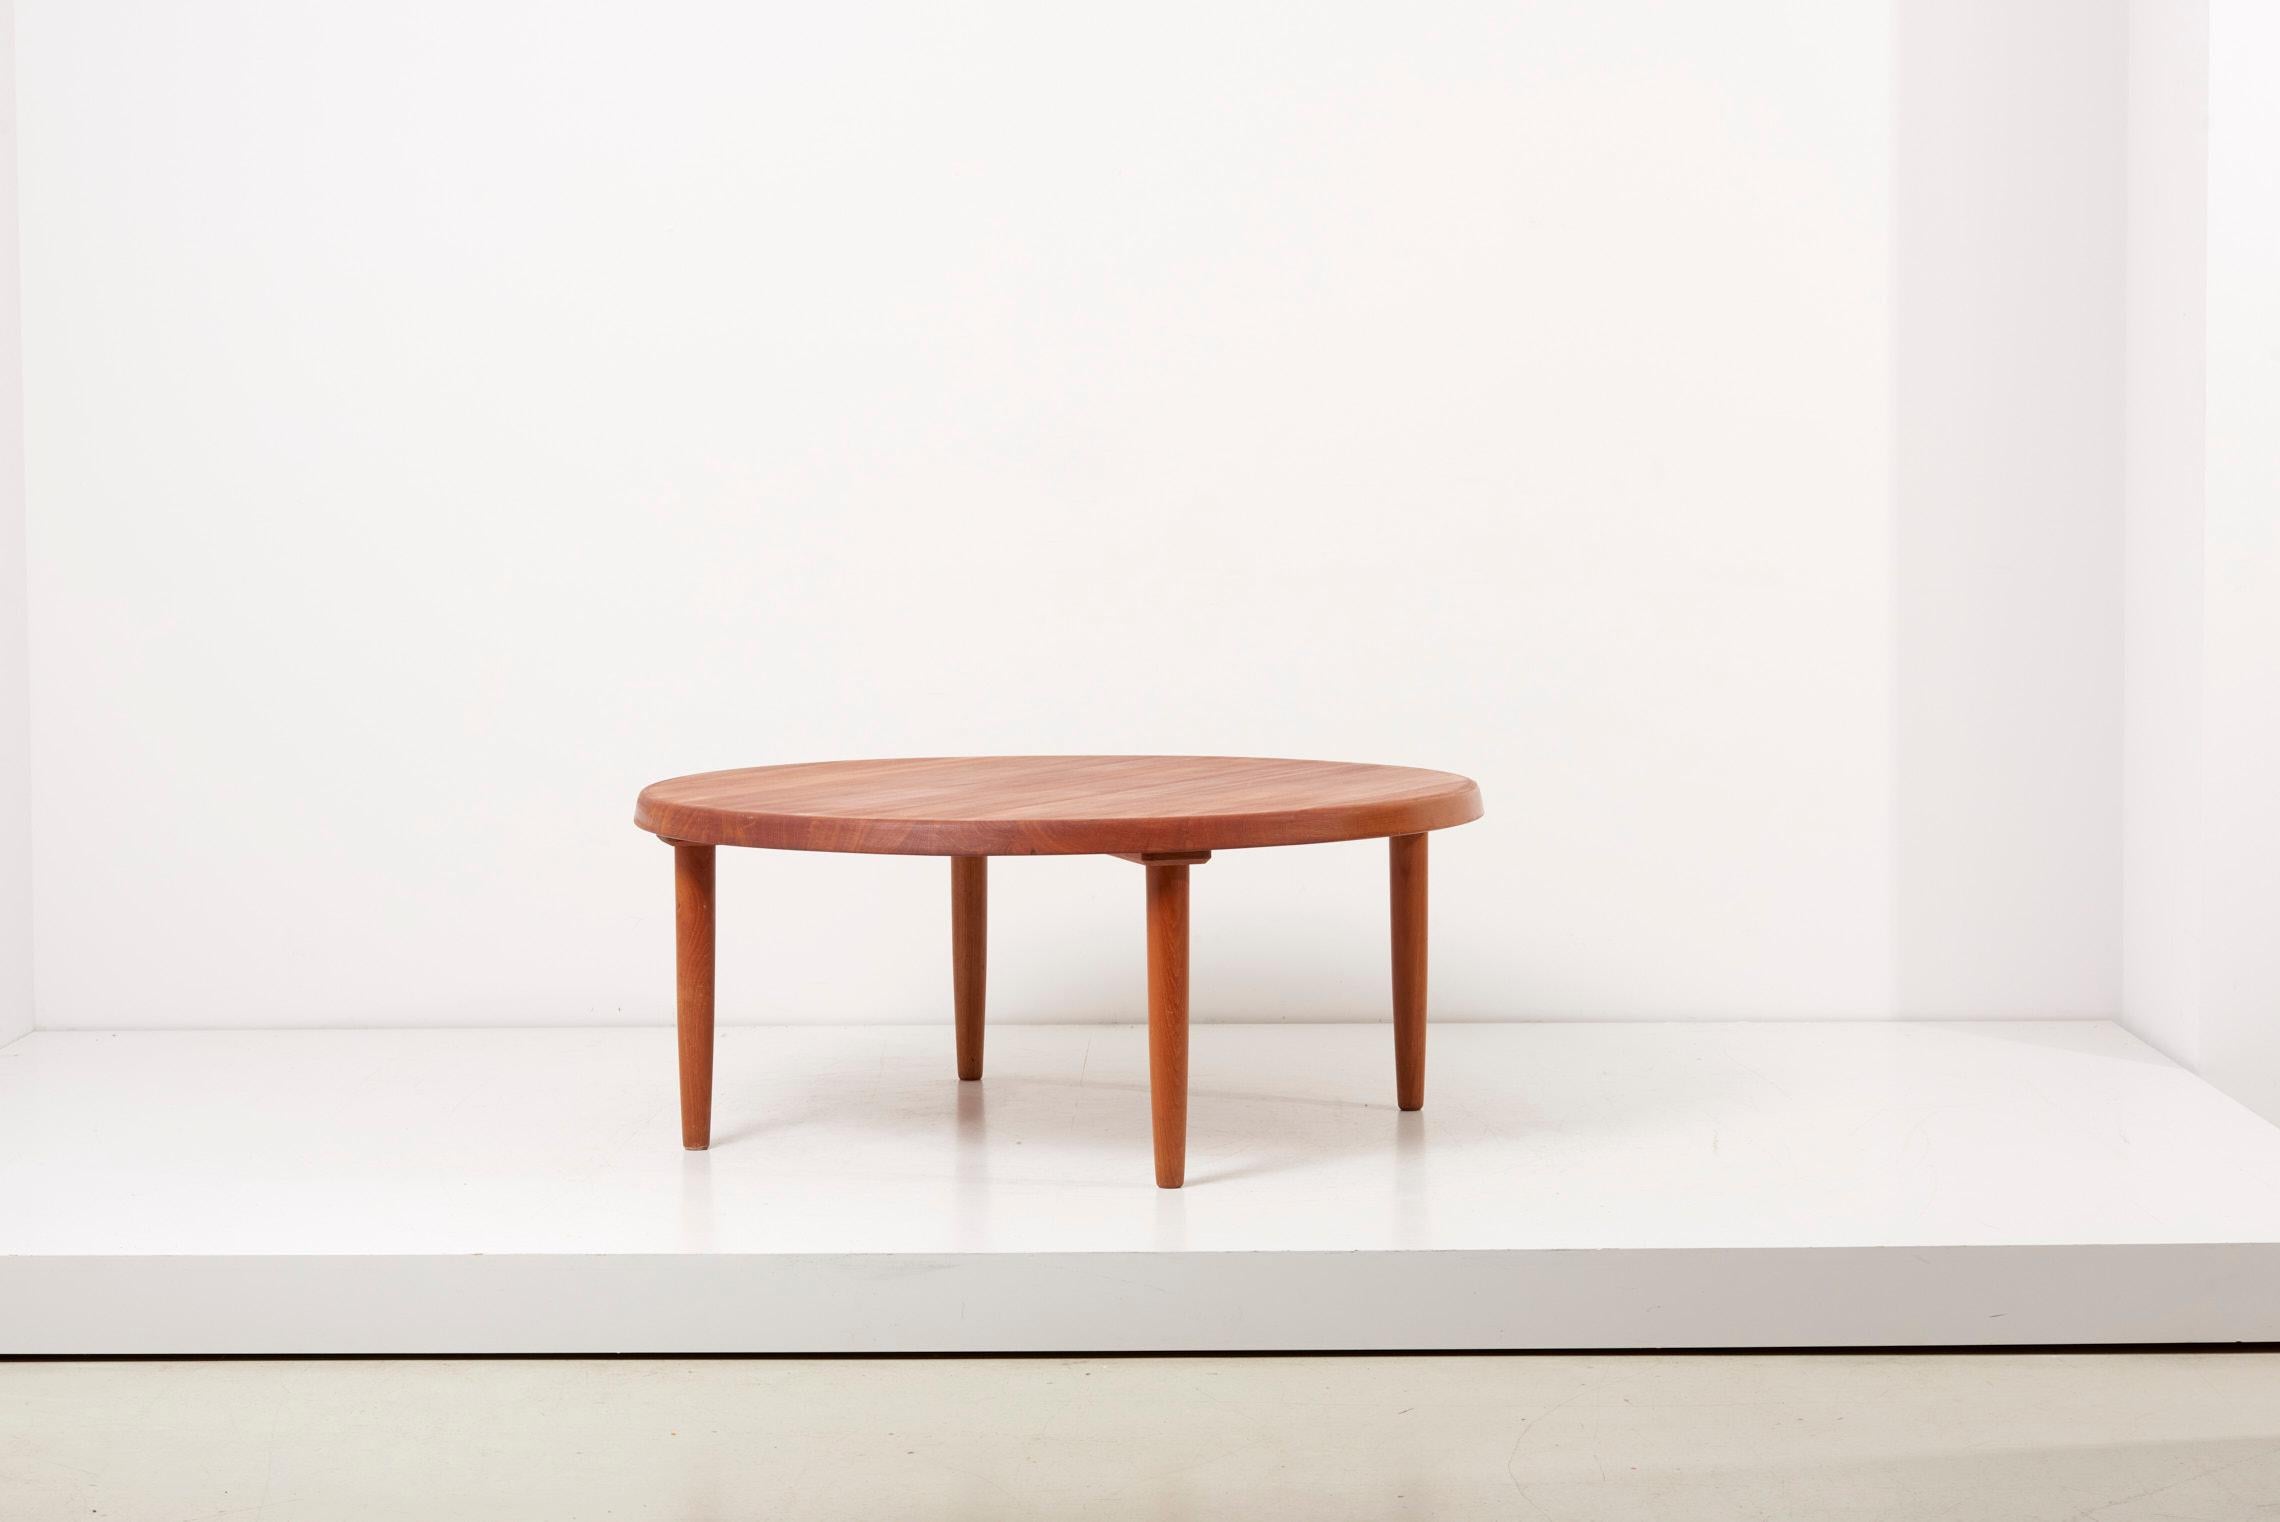 Solid teak coffee table, 1960s, Denmark.
 